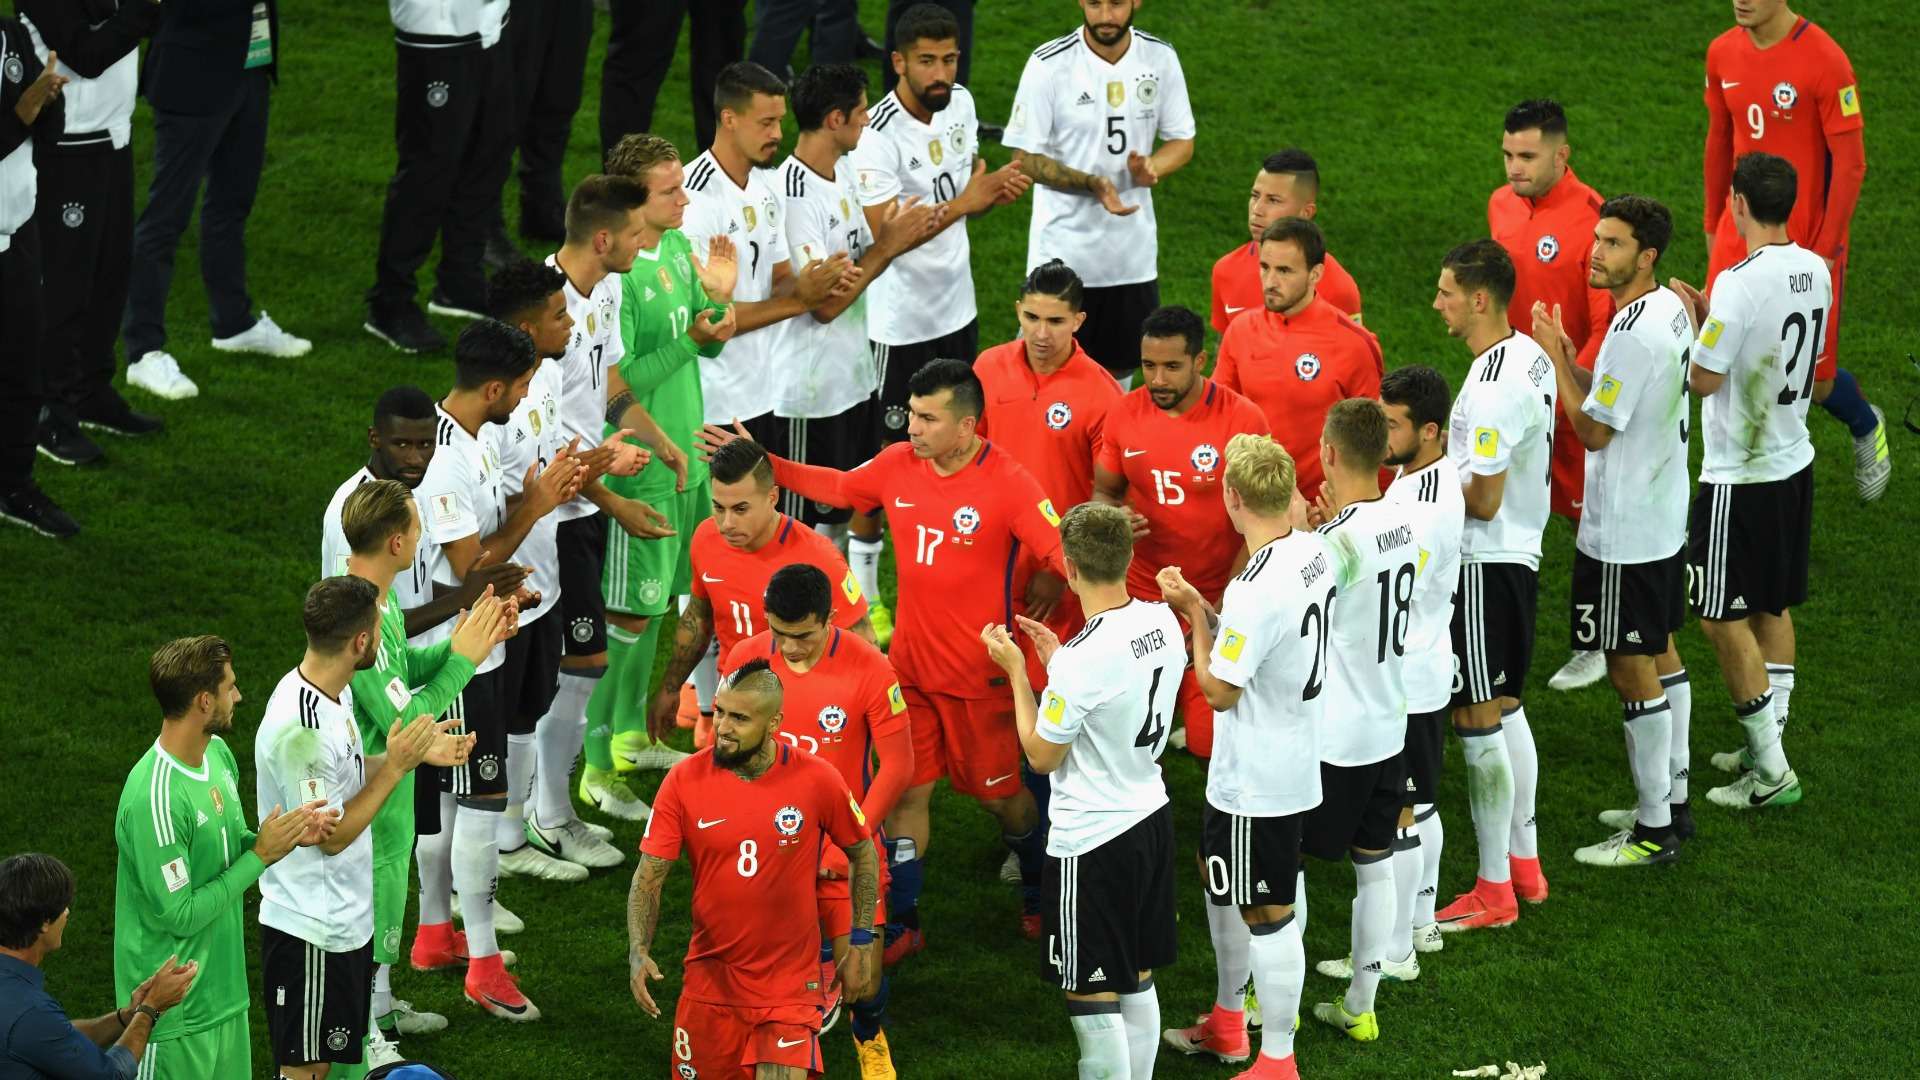 Chile Germany pasillo campeones 020717 Confederations Cup